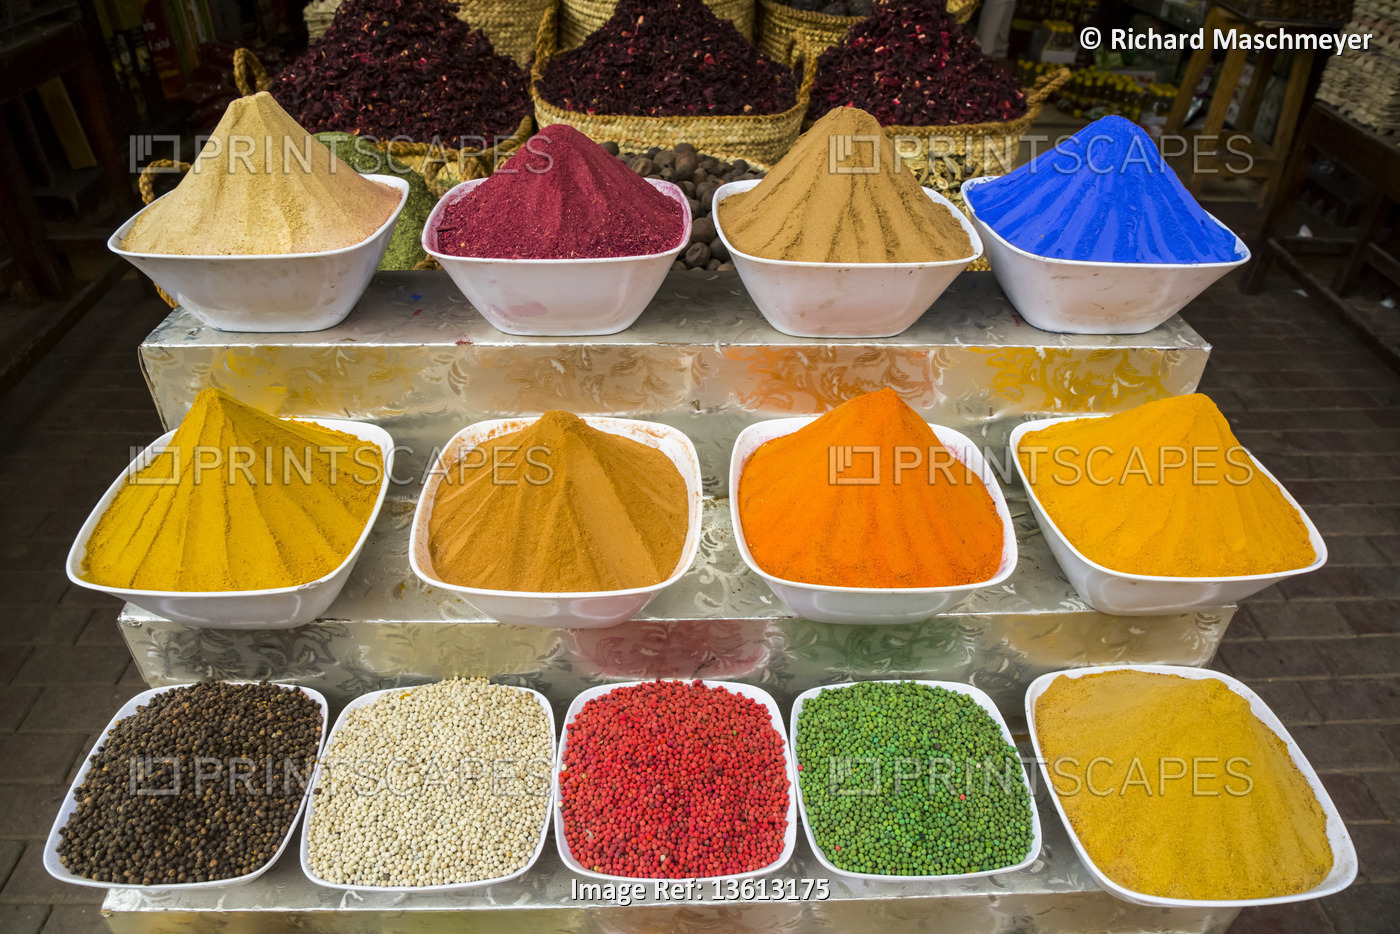 Spices for sale, Sharia el Souk (Bazaar); Aswan, Egypt